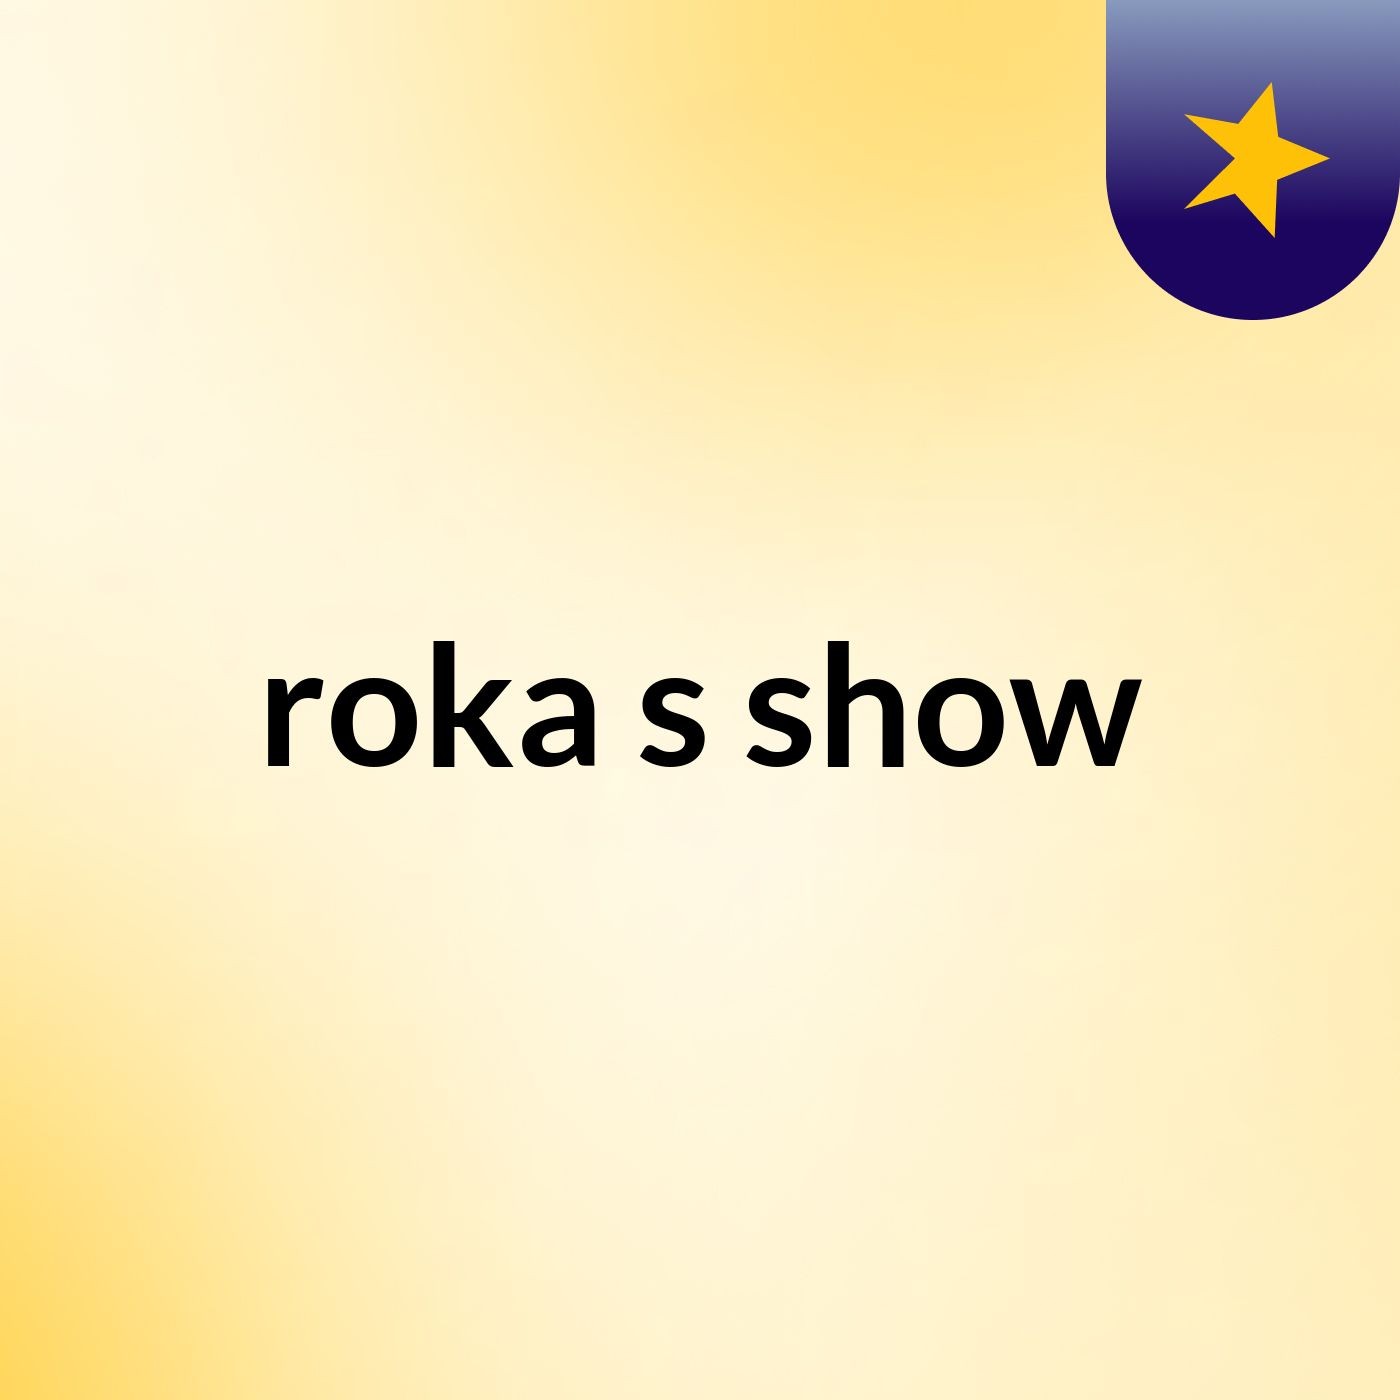 roka's show